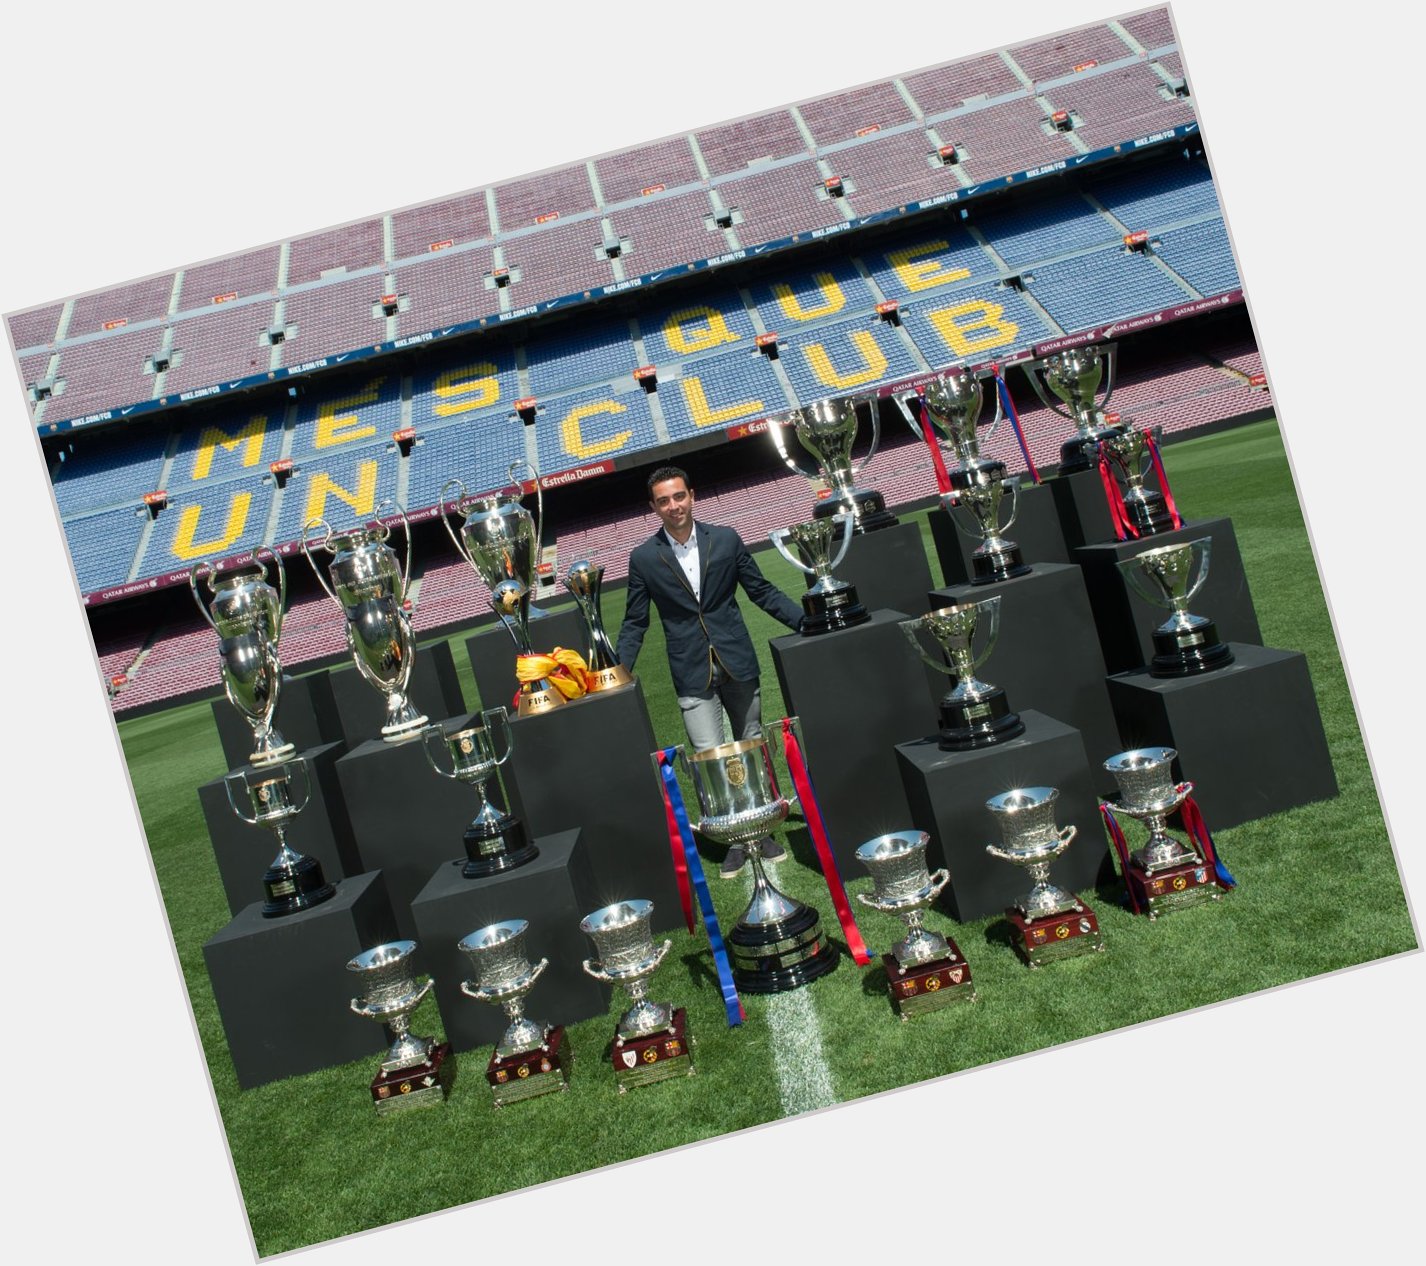 Happy birthday, four-time winner &amp; Barcelona legend Xavi Hernández! 